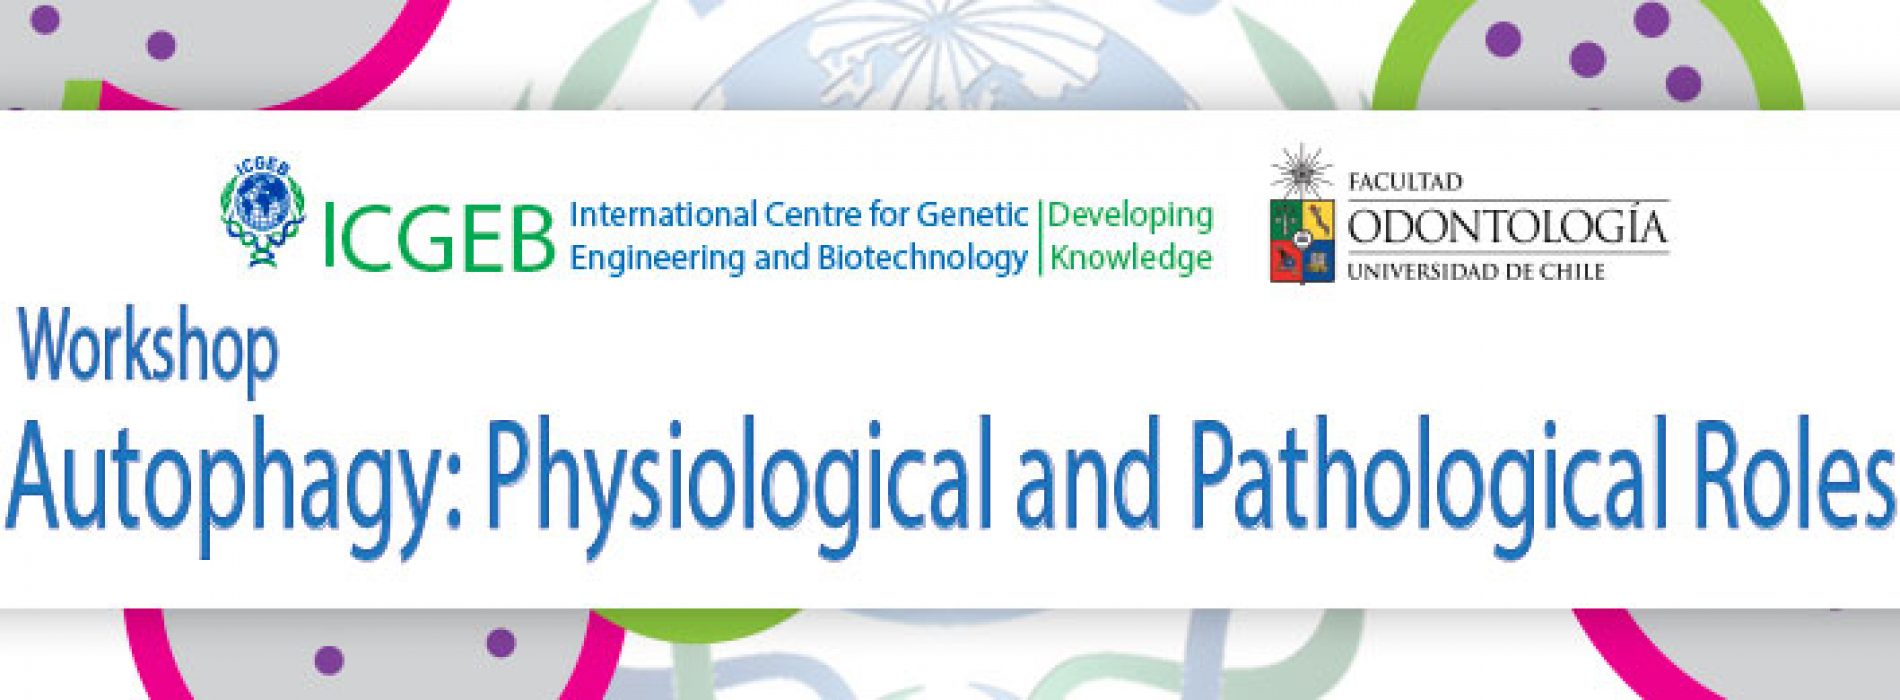 ICGEB Workshop "Autophagy: Physiological and Pathological Roles"